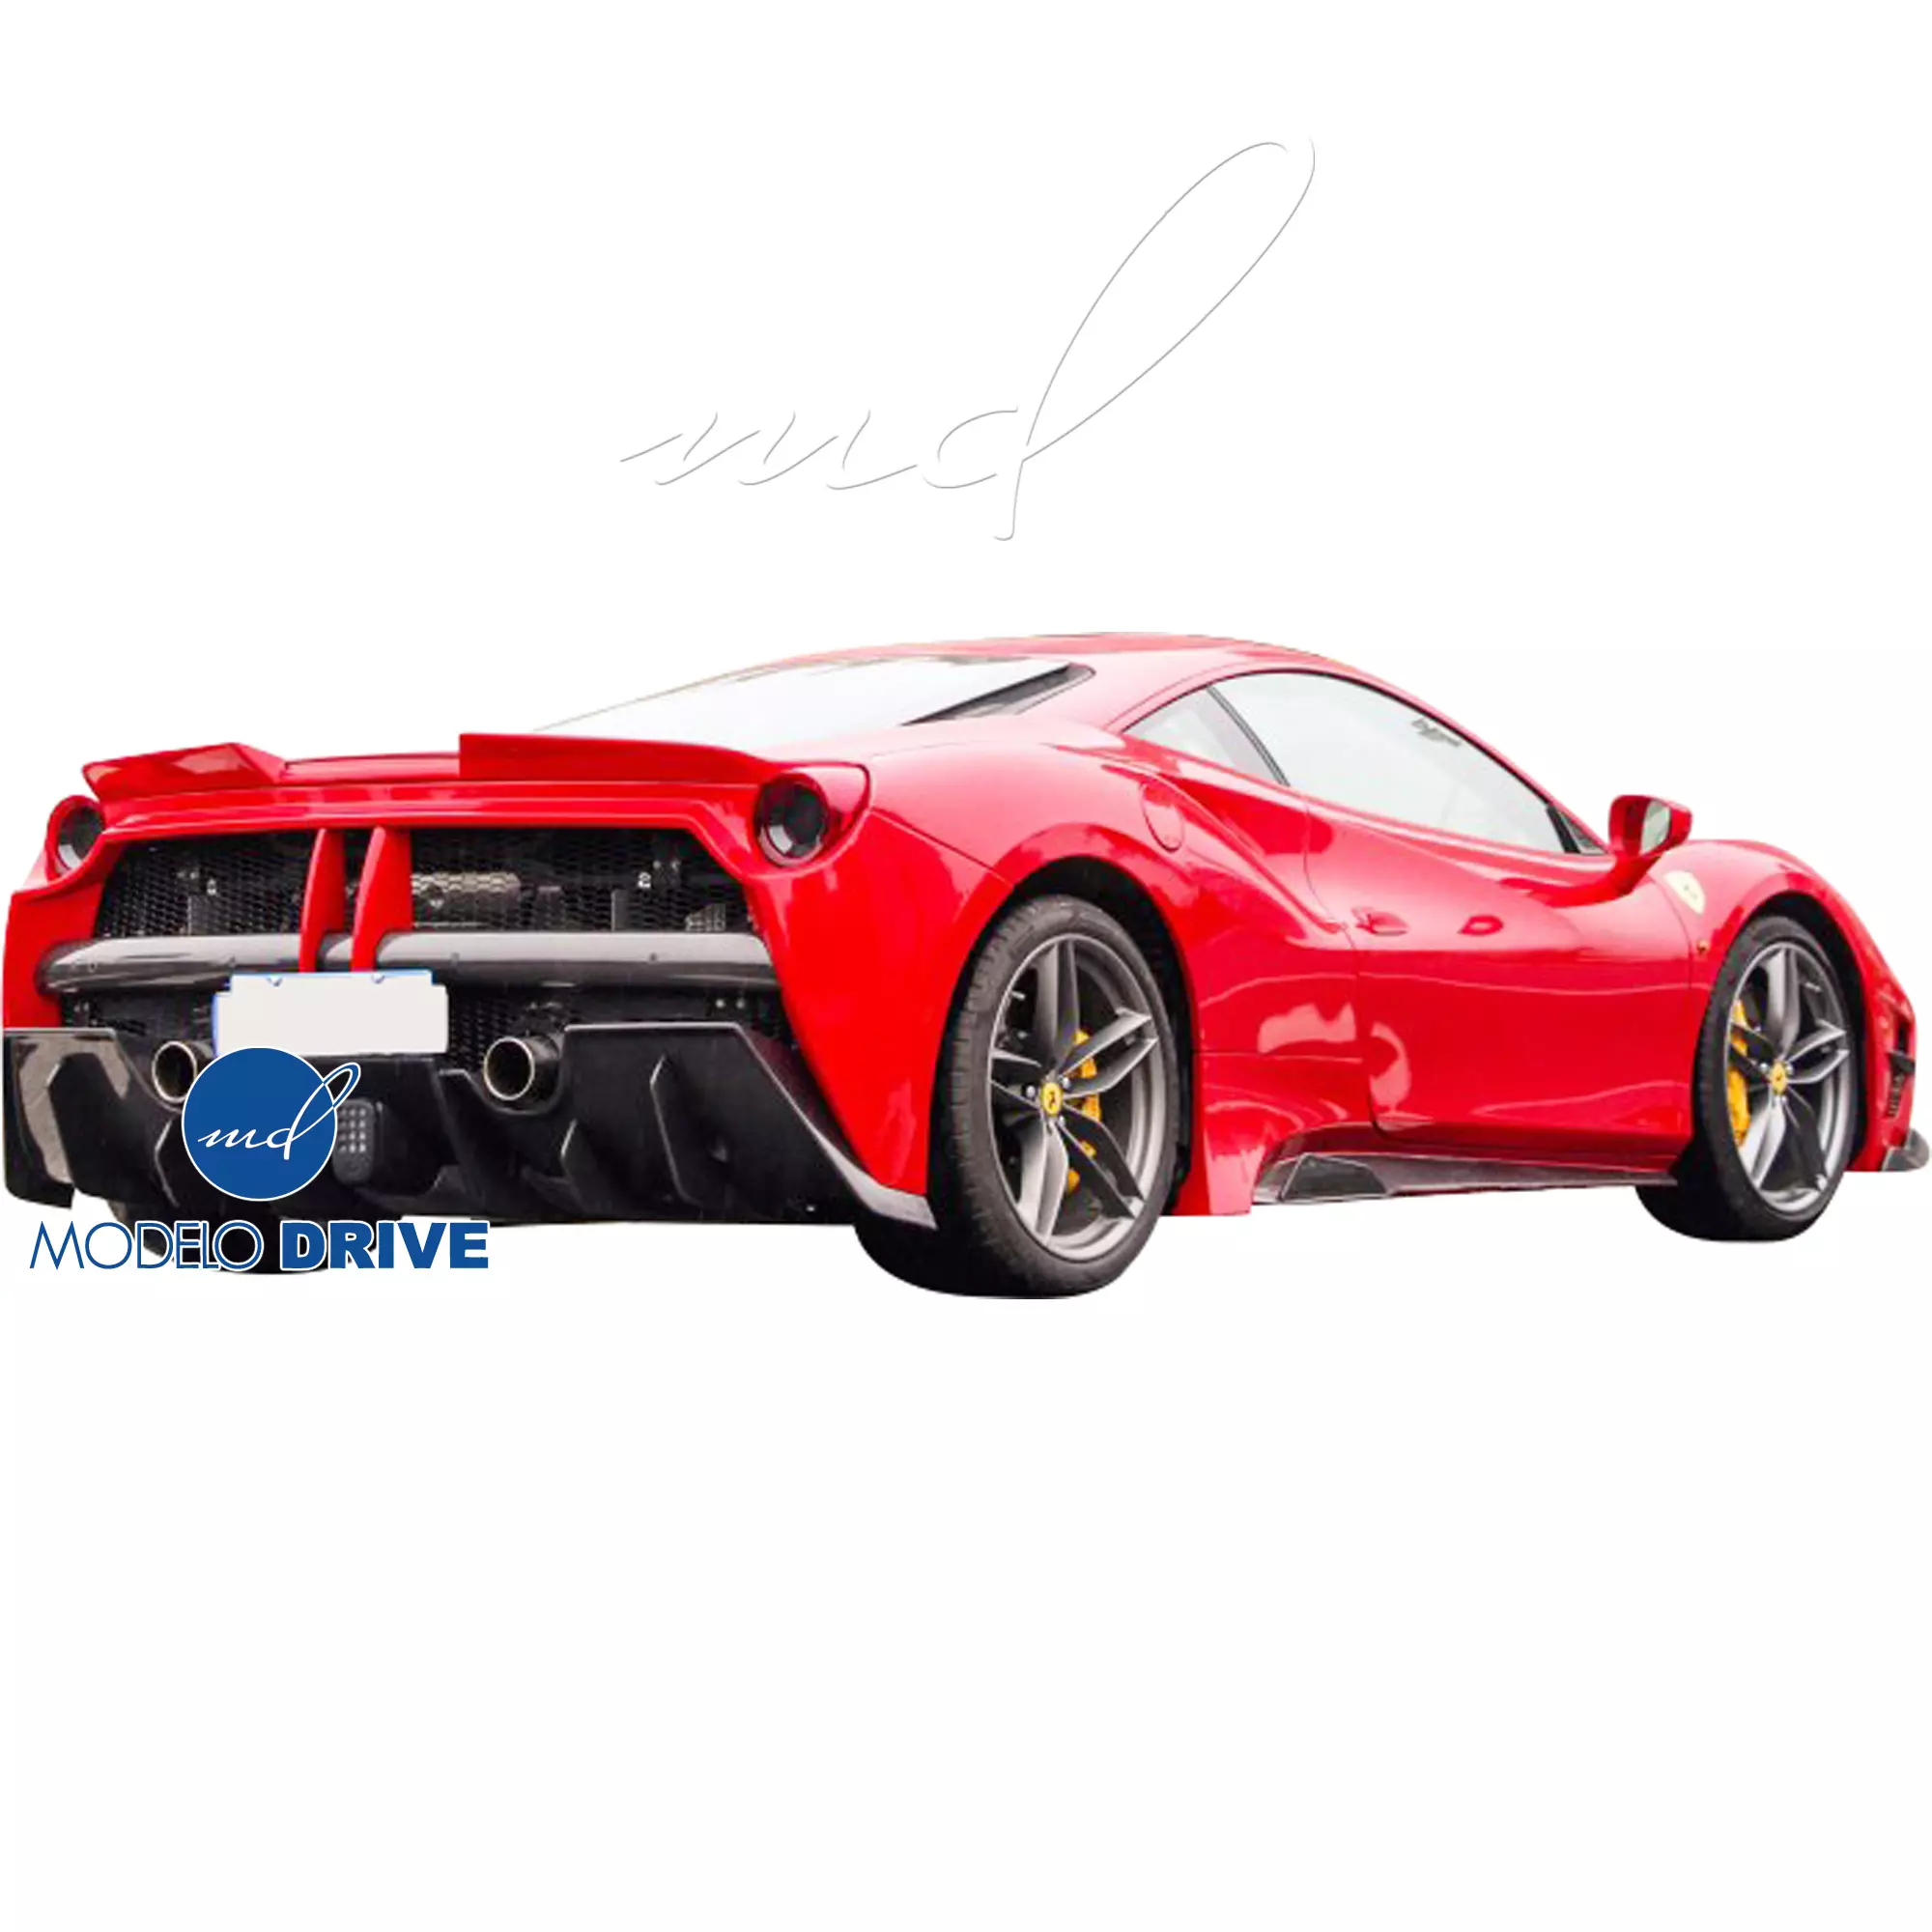 ModeloDrive Partial Carbon Fiber MDES Body Kit > Ferrari 488 GTB F142M 2016-2019 - Image 46